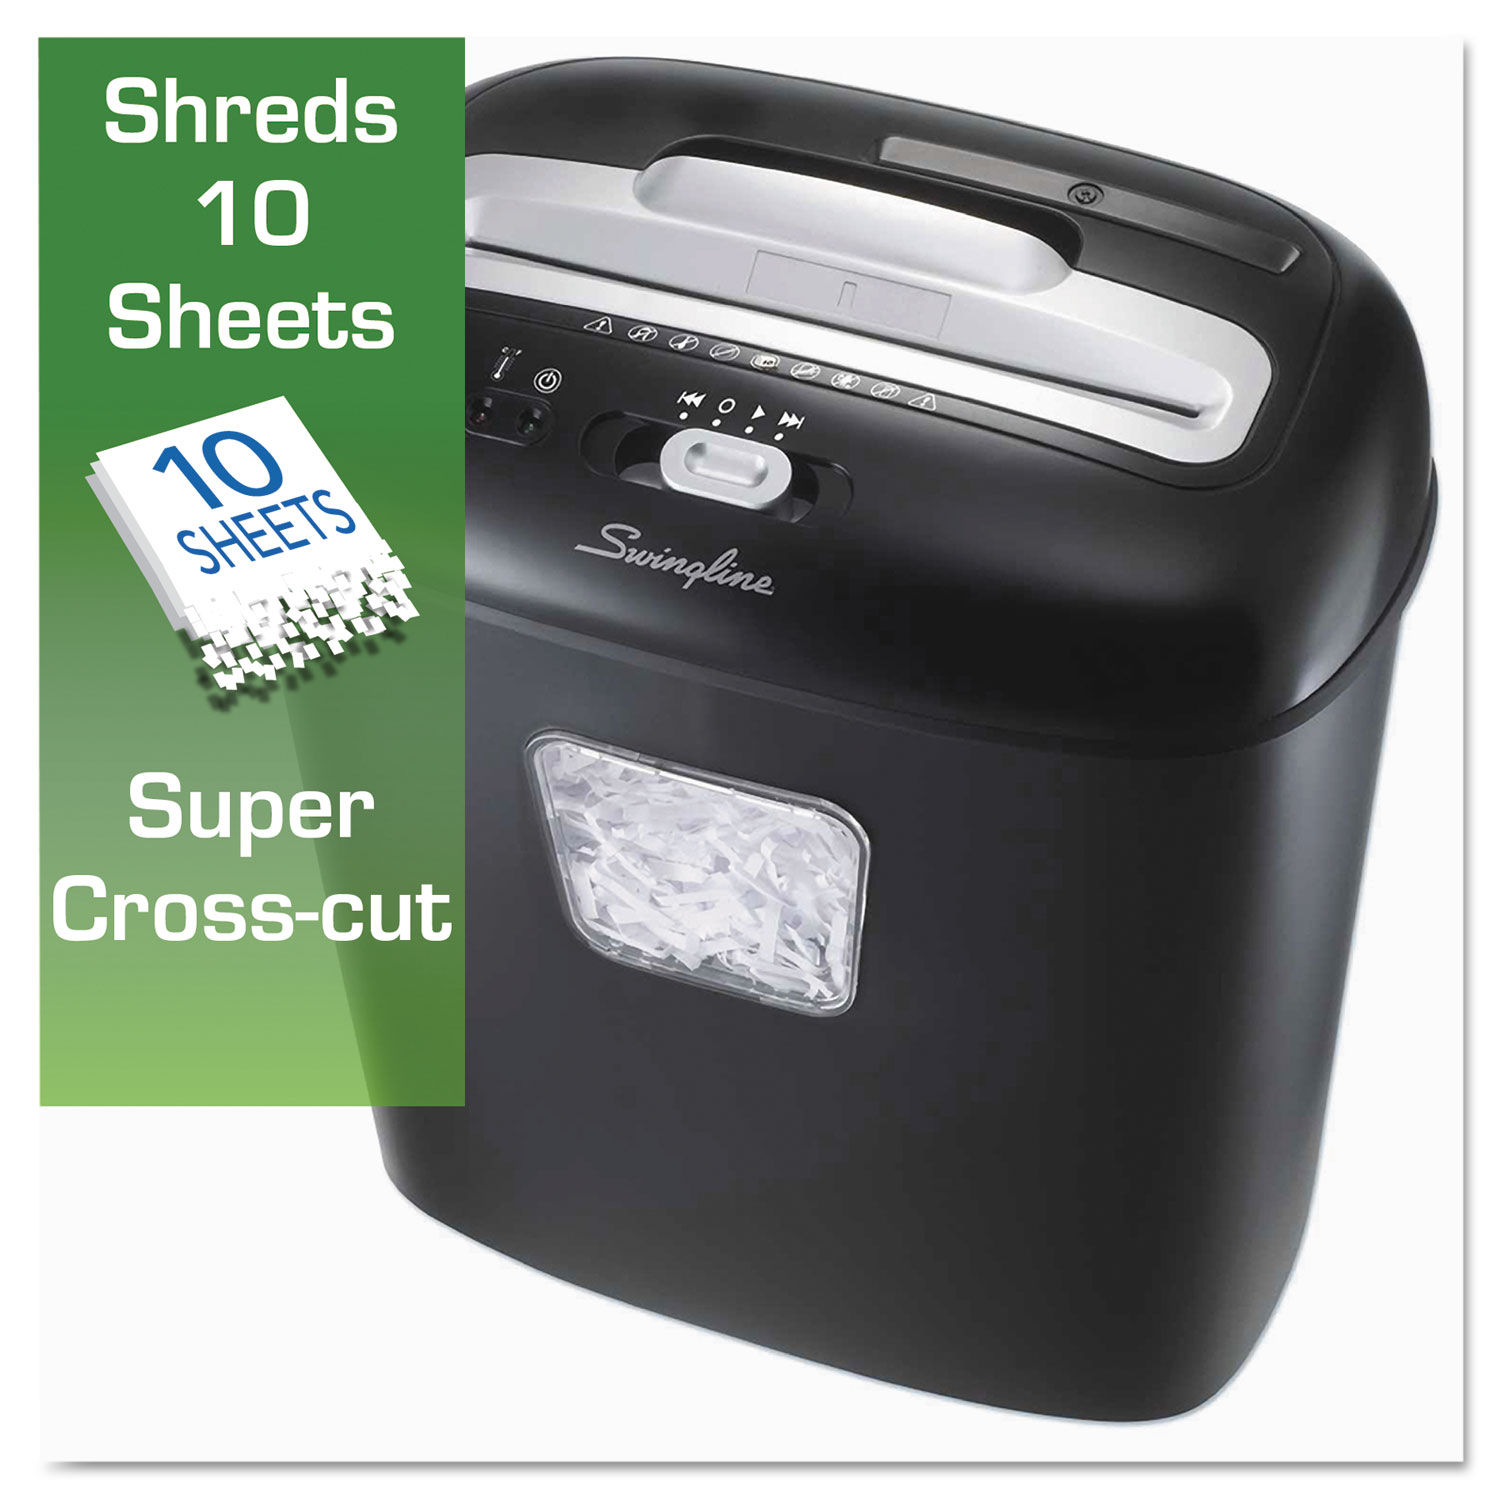 EX10-05 Super Cross-Cut Shredder, 10 Sheets, 1 User